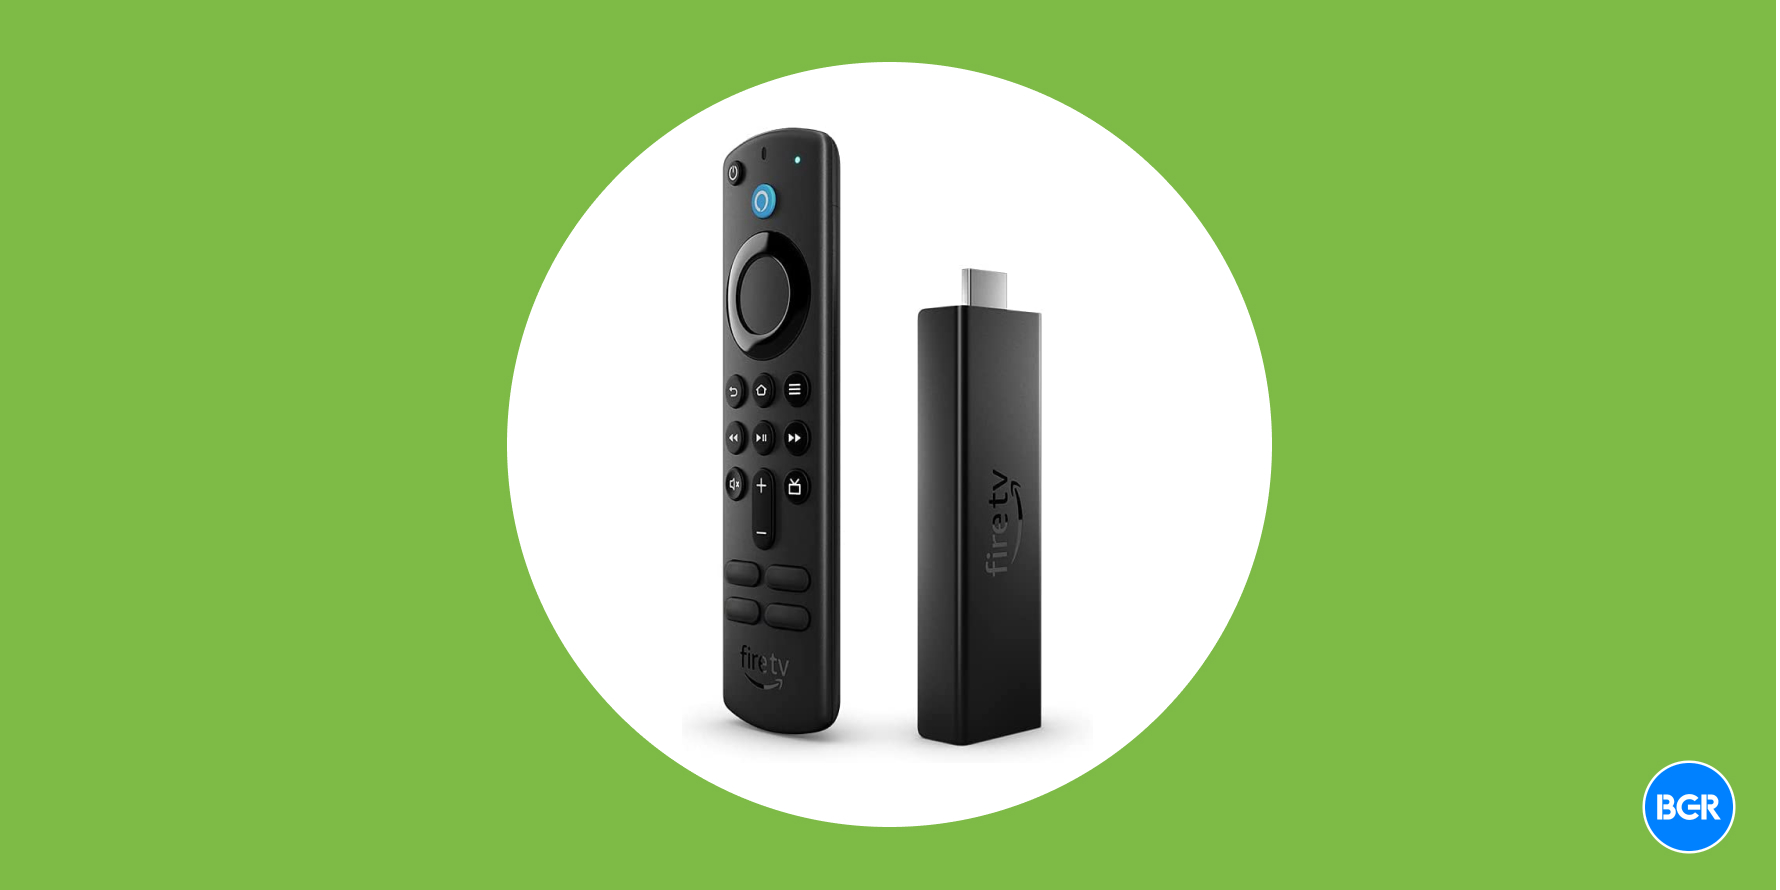 Fire TV Stick 4K Max Deals: Save $20 on Amazon's best streamer